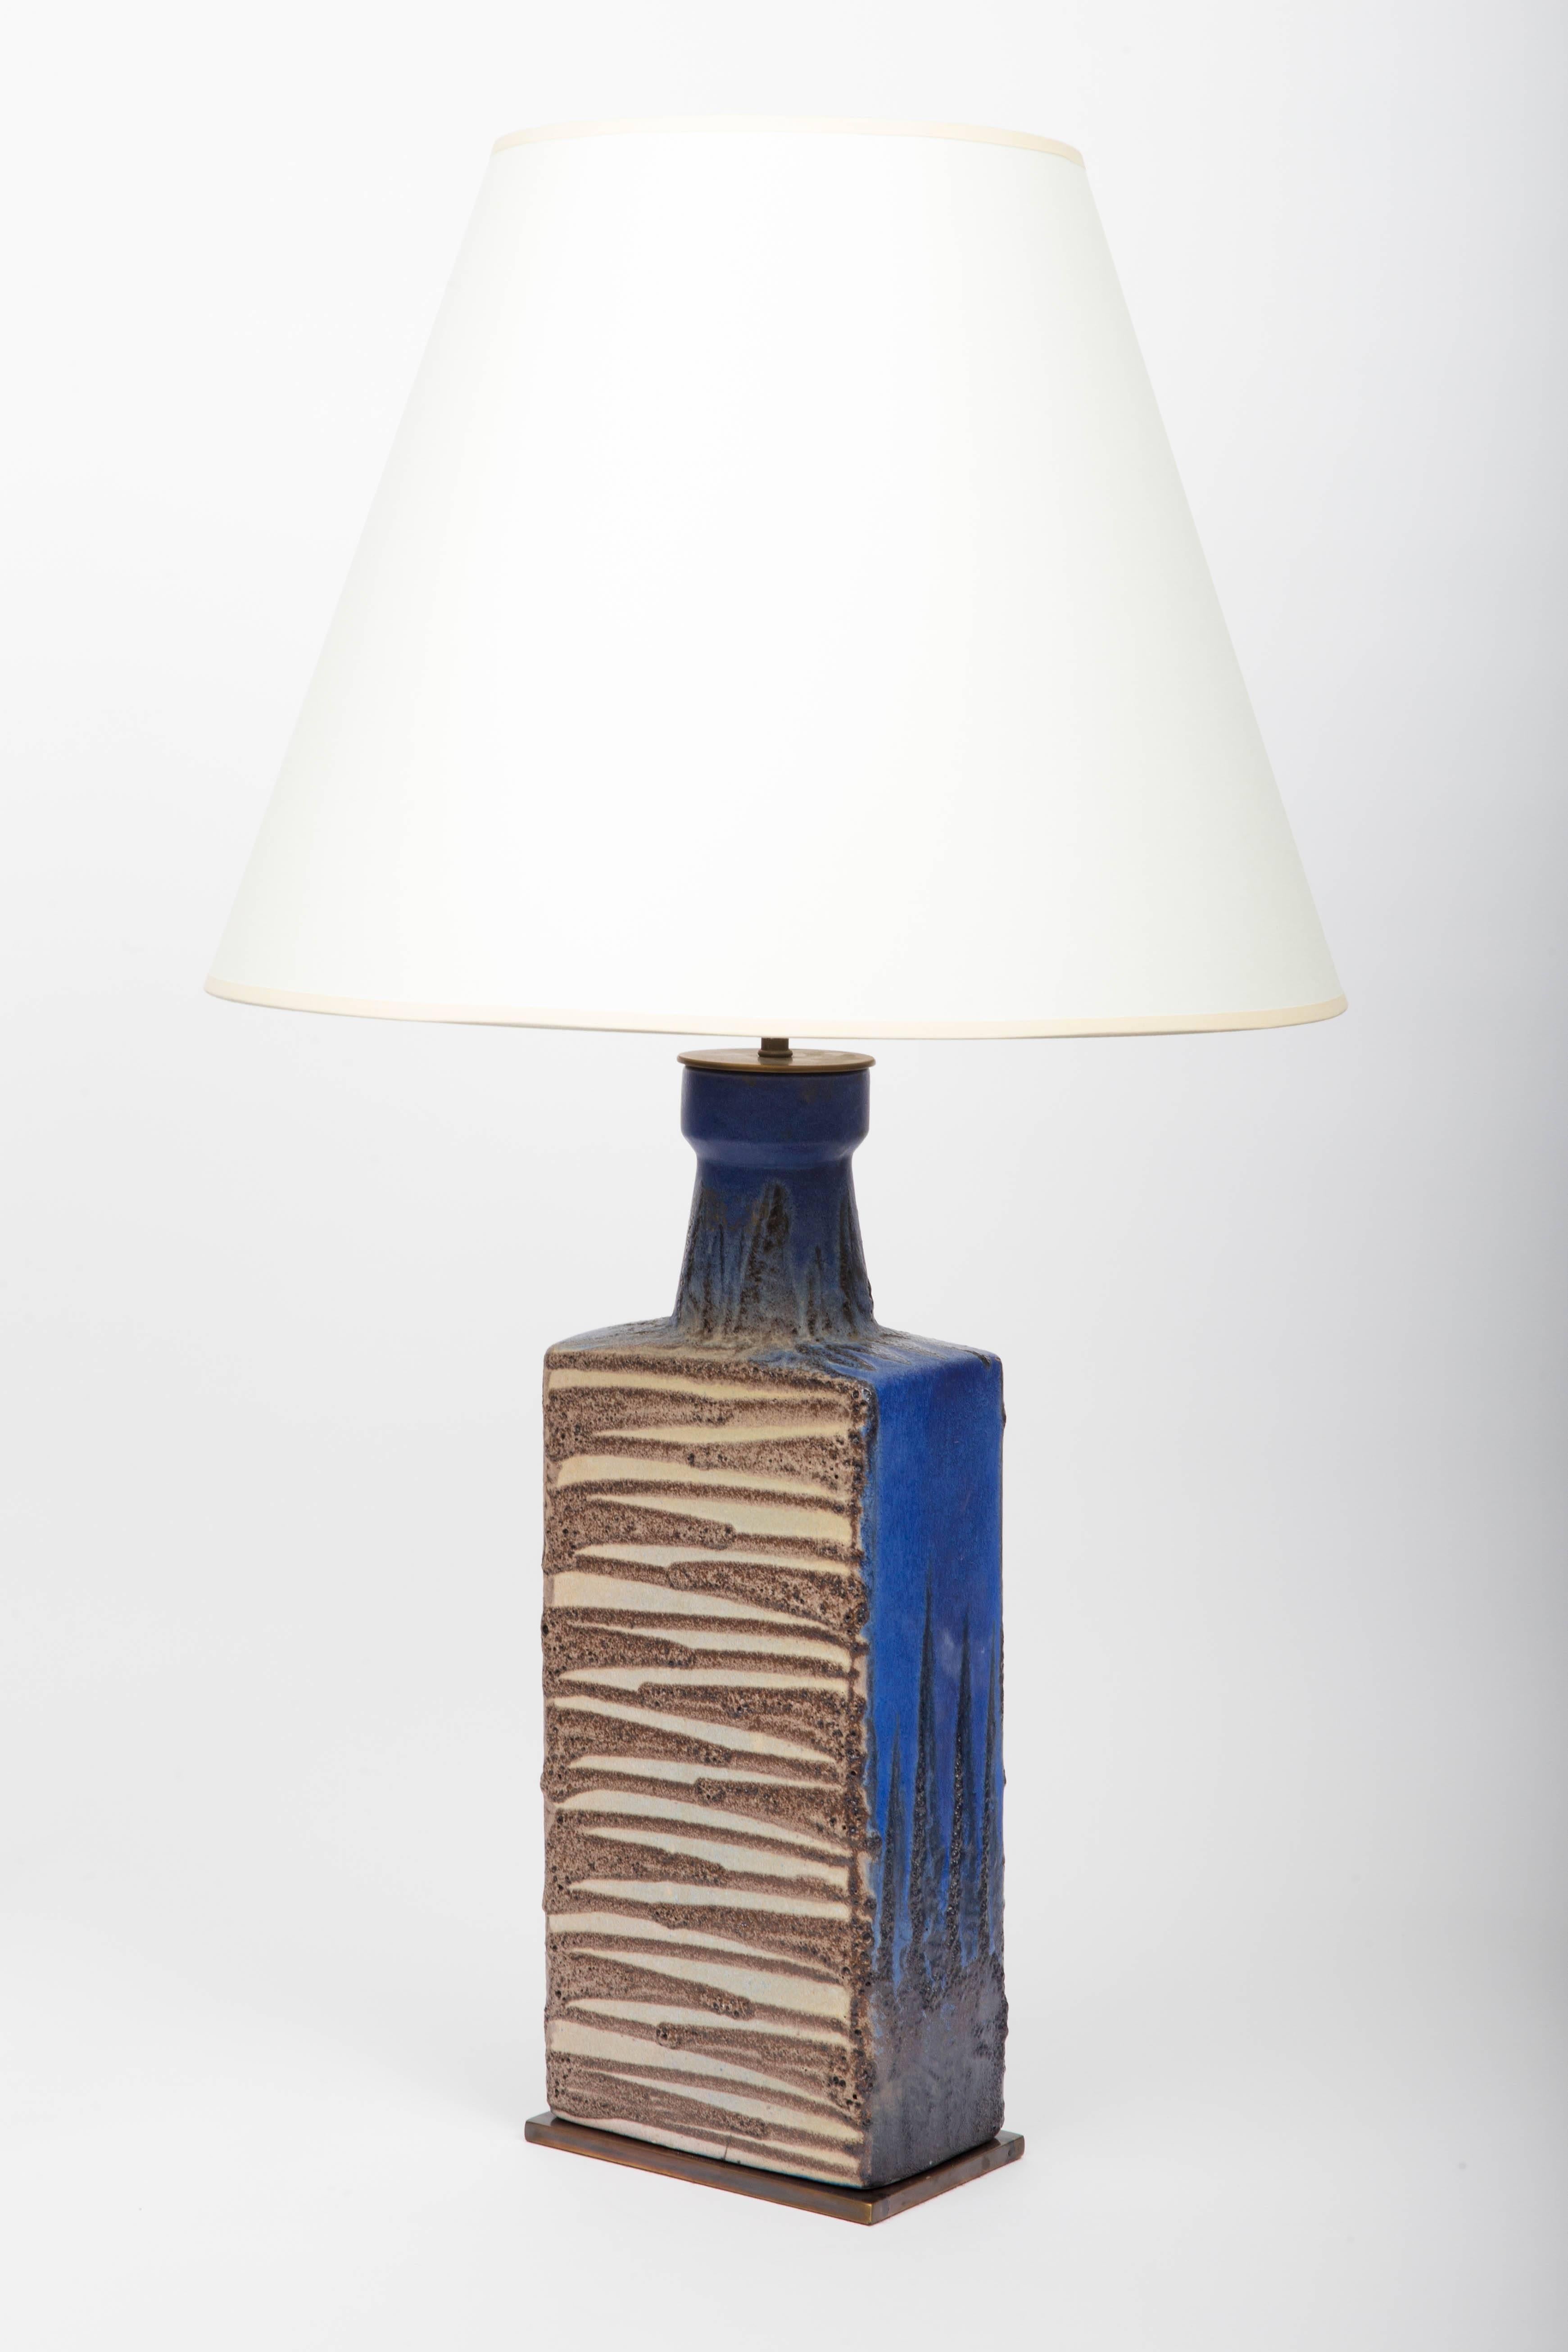 German Modernist Blue and Brown Ceramic Vase, Converted into Lamp